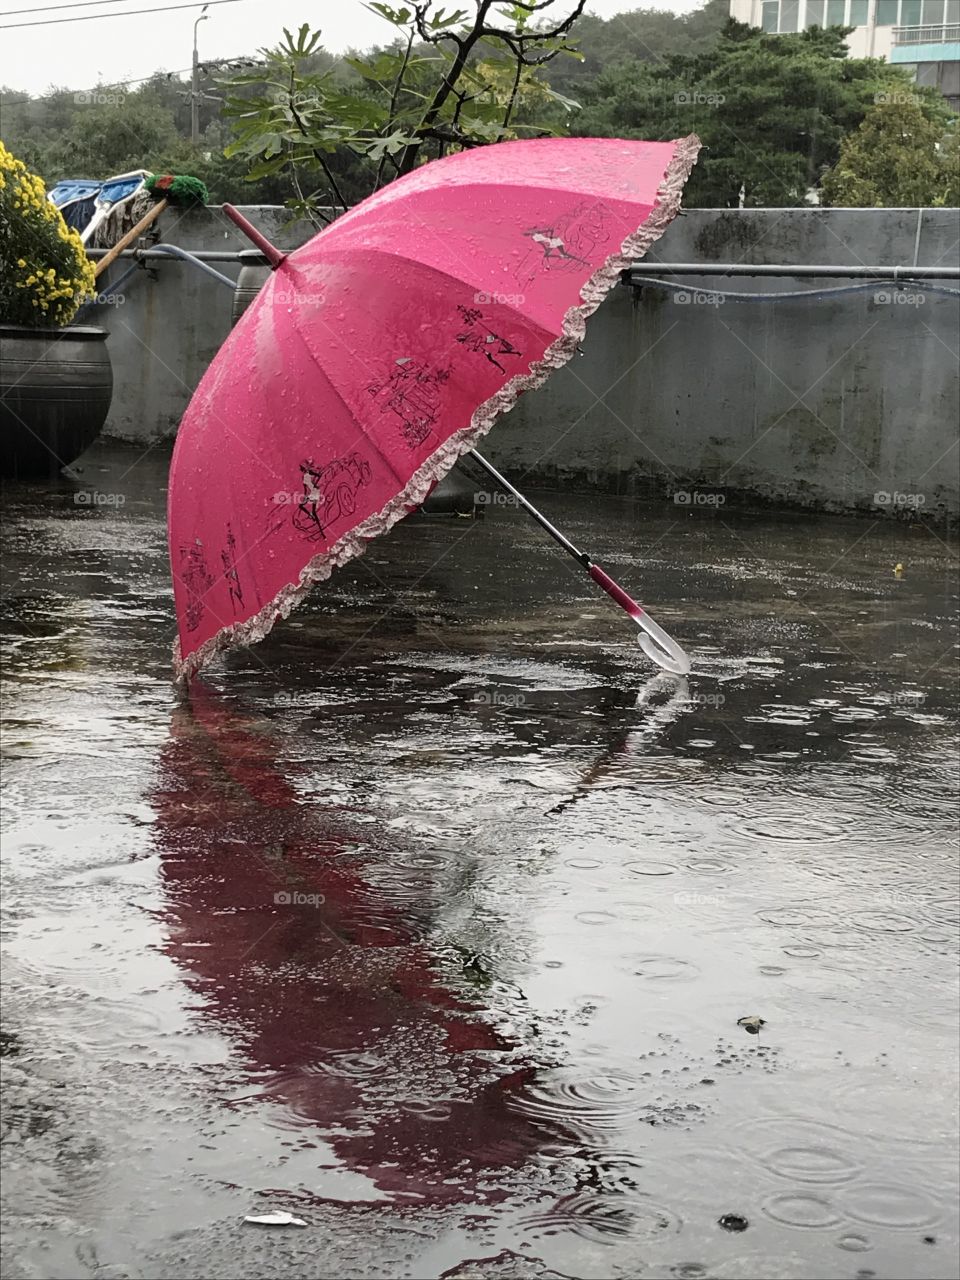 An pink umbrella under the heavy rain outside